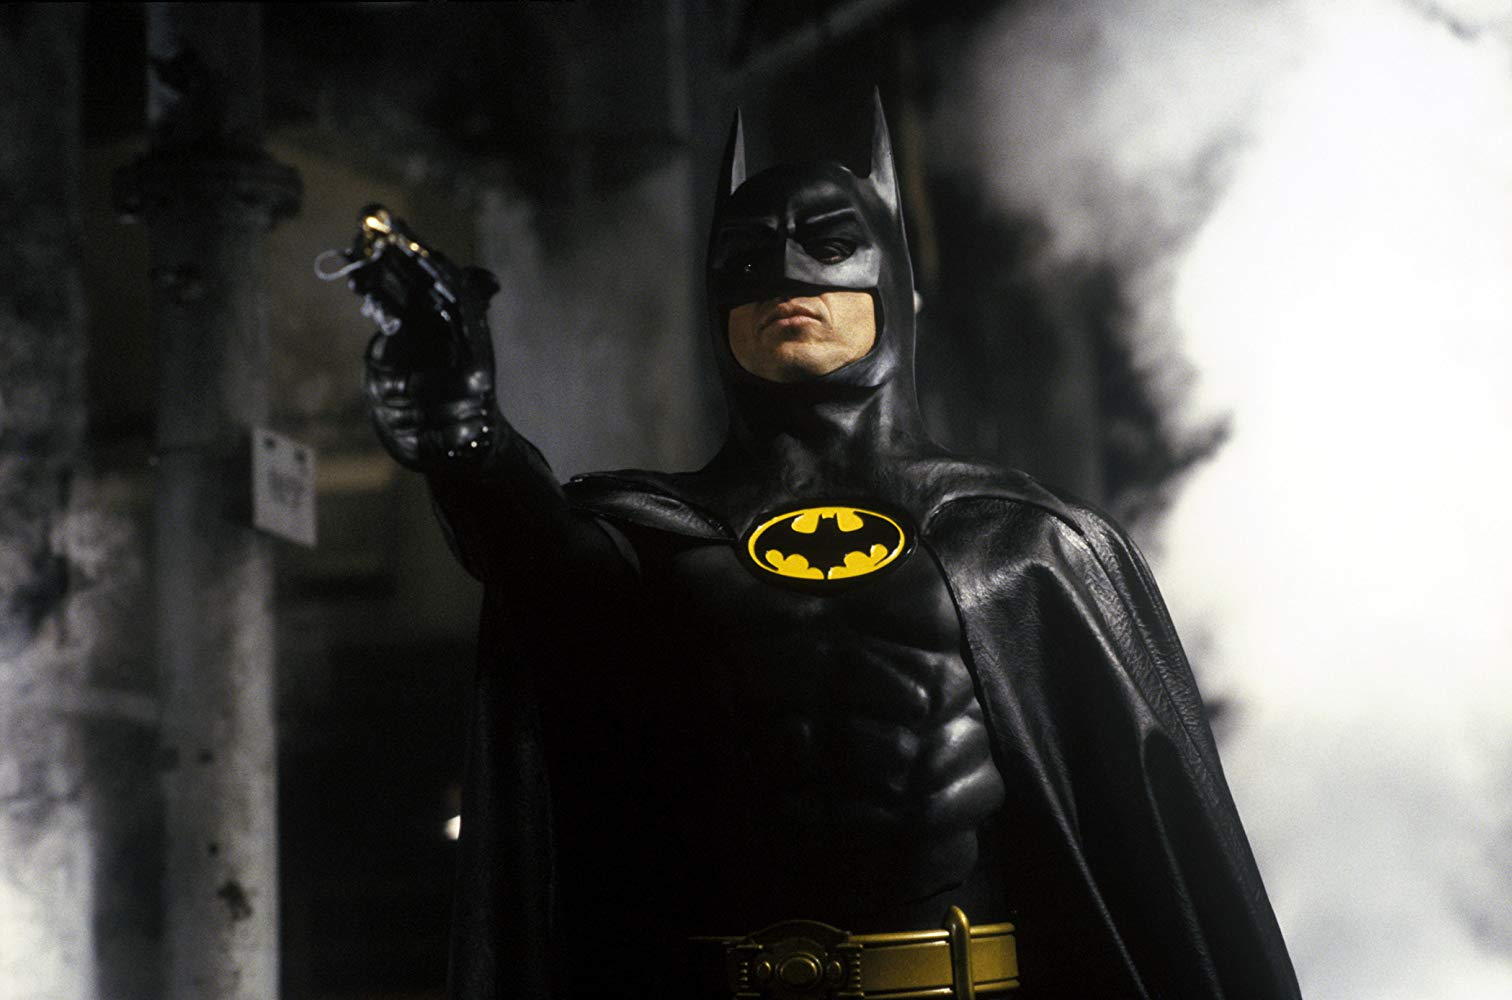 Michael Keaton as Batman (1989)